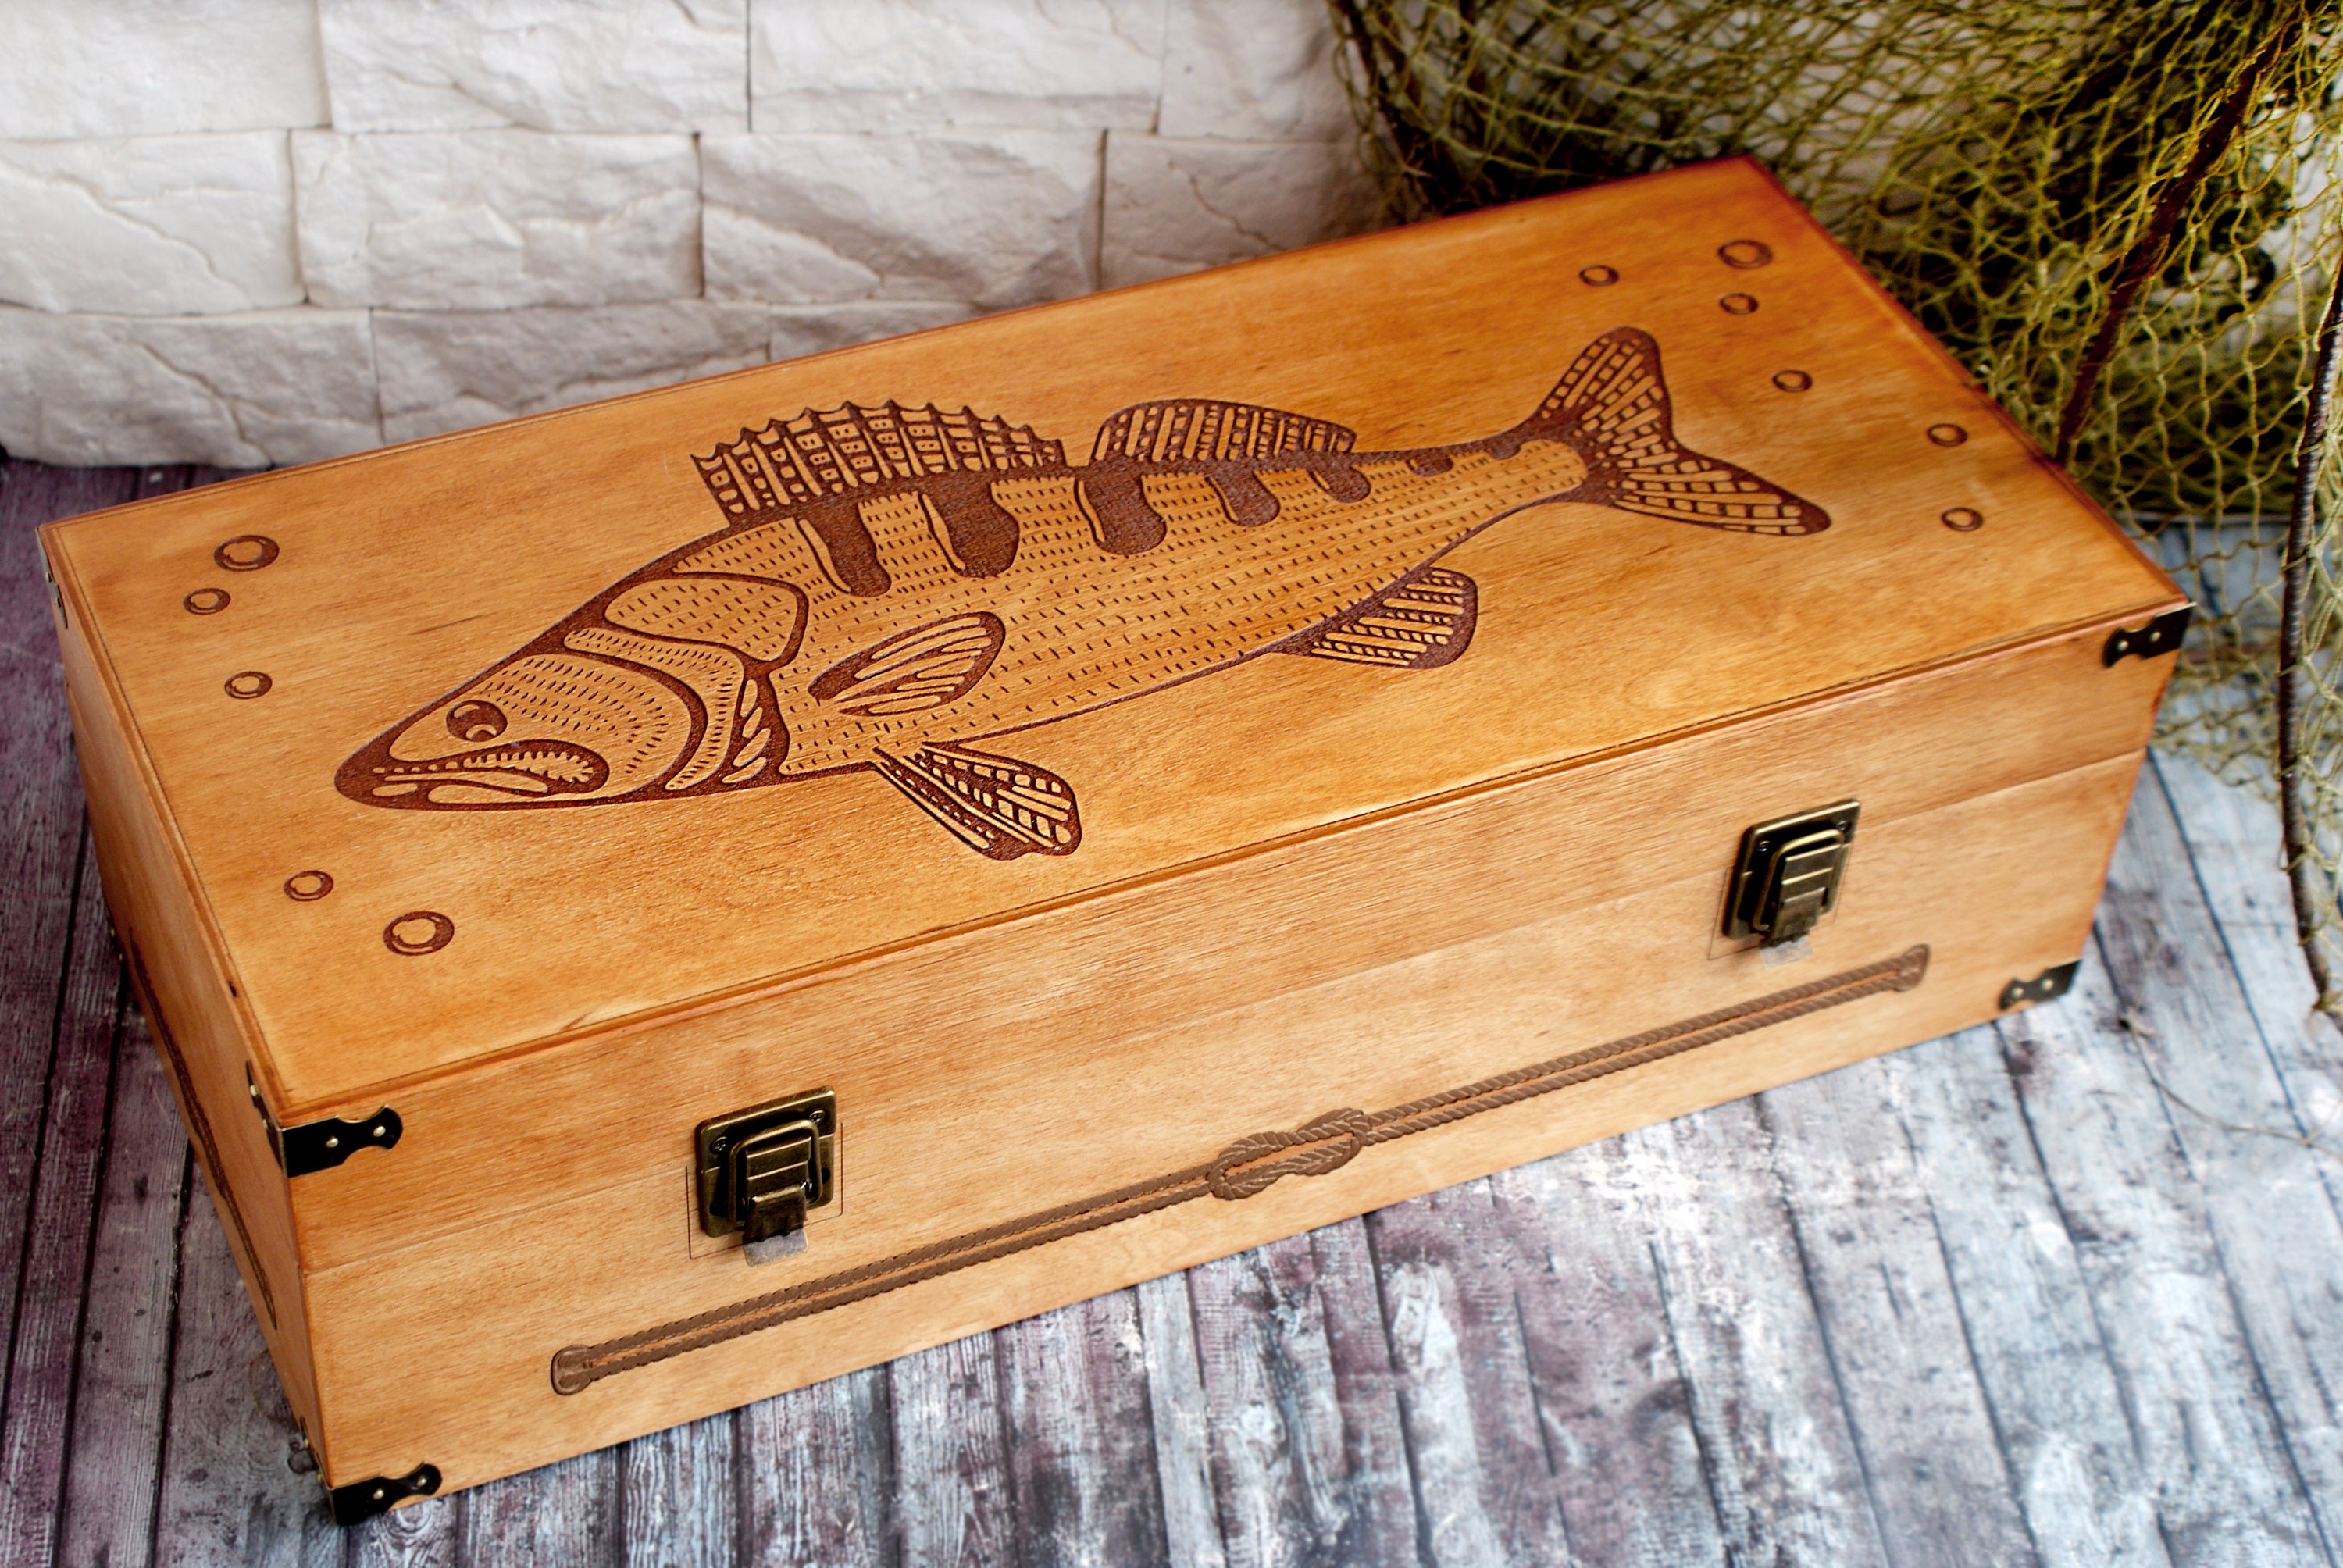 Wooden fishing tackle box - Made on a Glowforge - Glowforge Owners Forum